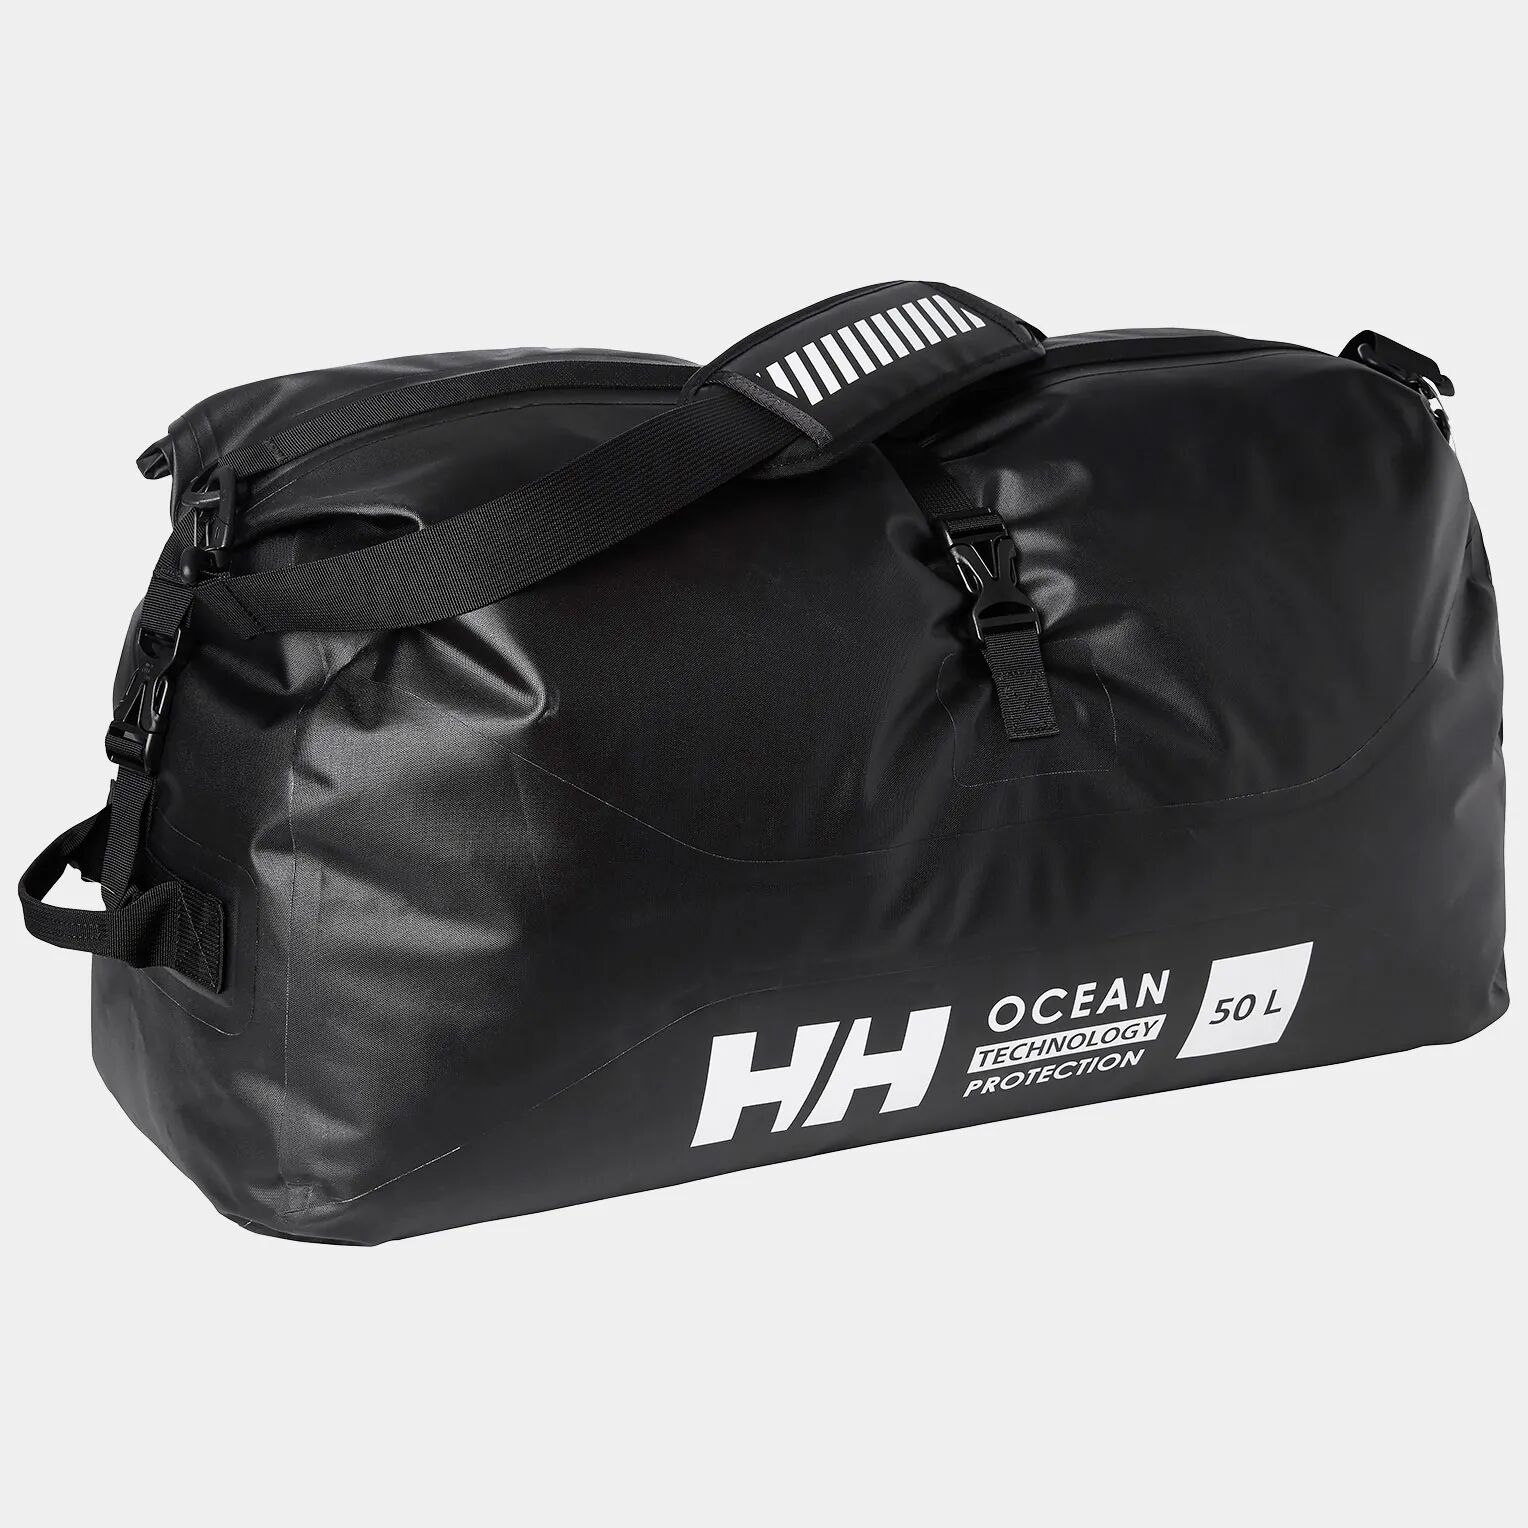 Helly Hansen Offshore Waterproof Duffel Bag, 50L Grey STD